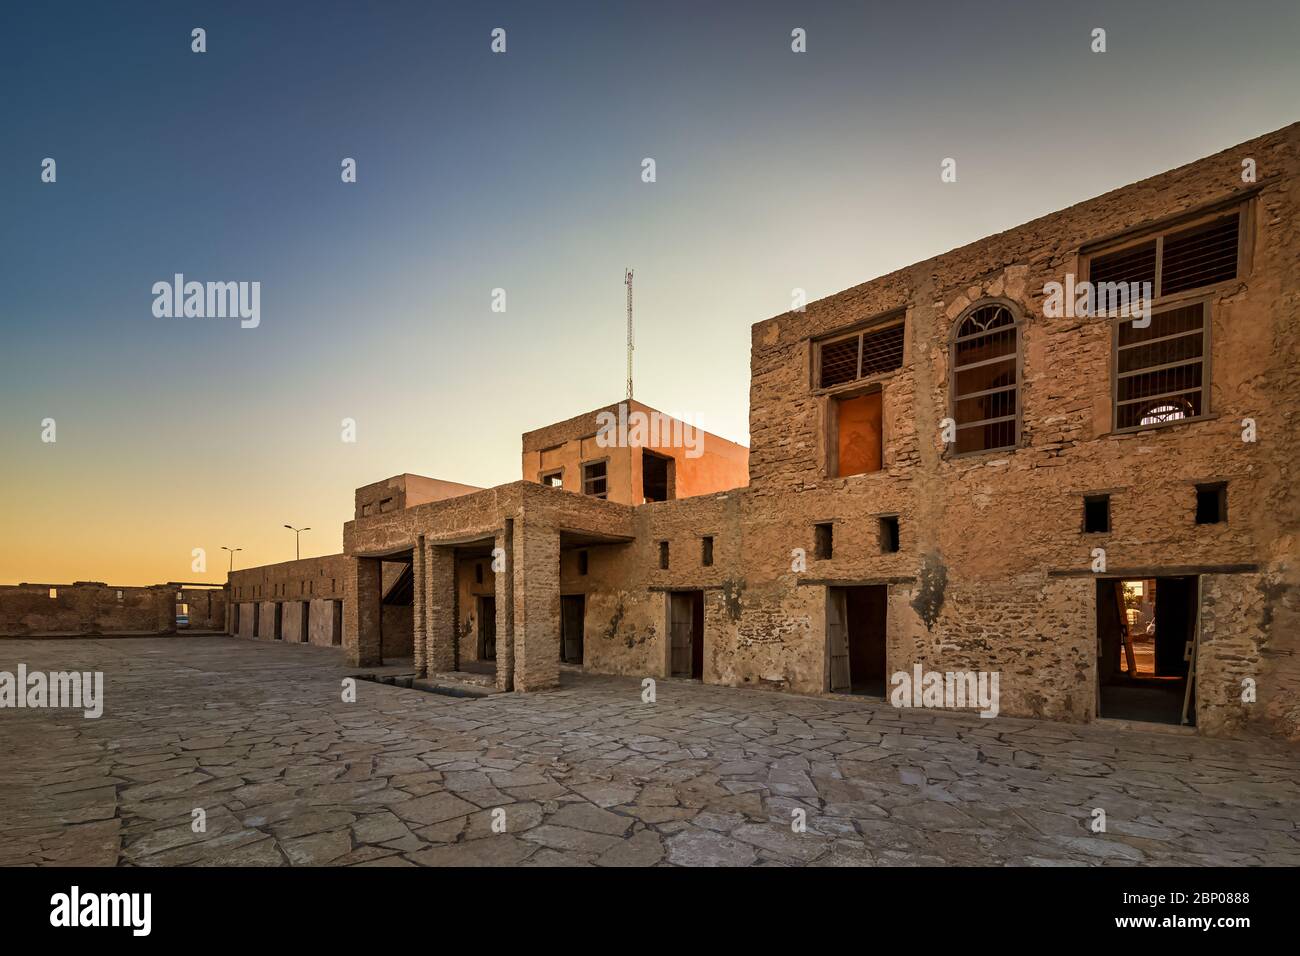 Inside view of historical Old Al-Uqair port in Saudi Arabia. Stock Photo